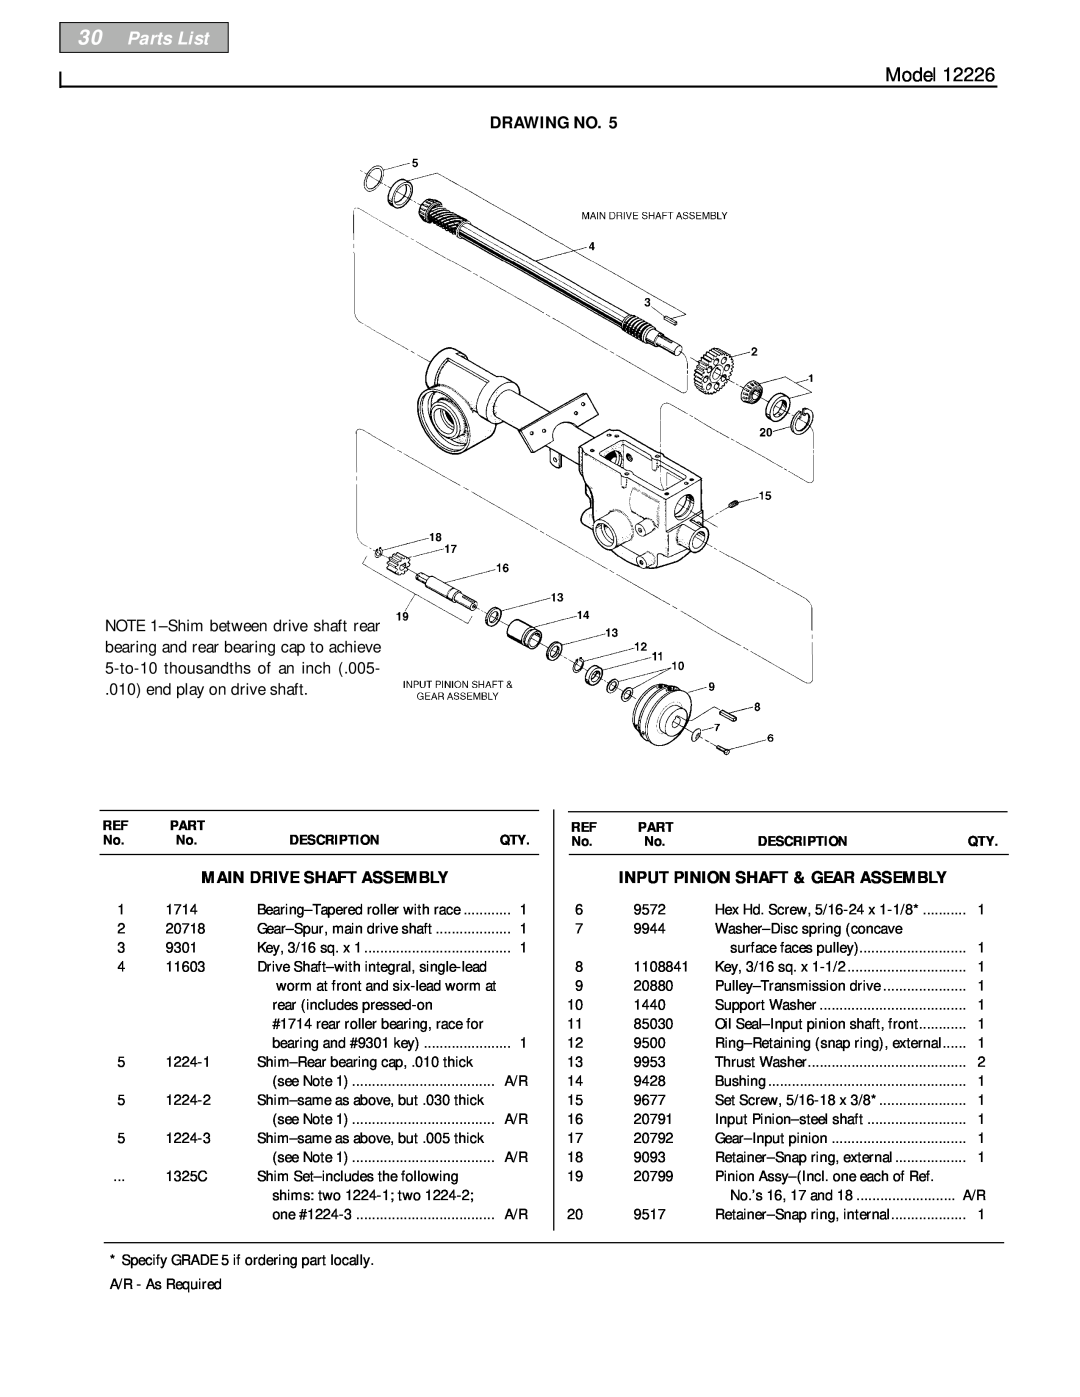 Bolens 12226 Parts List, Main Drive Shaft Assembly, Input Pinion Shaft & Gear Assembly, Model, Drawing No, Description 